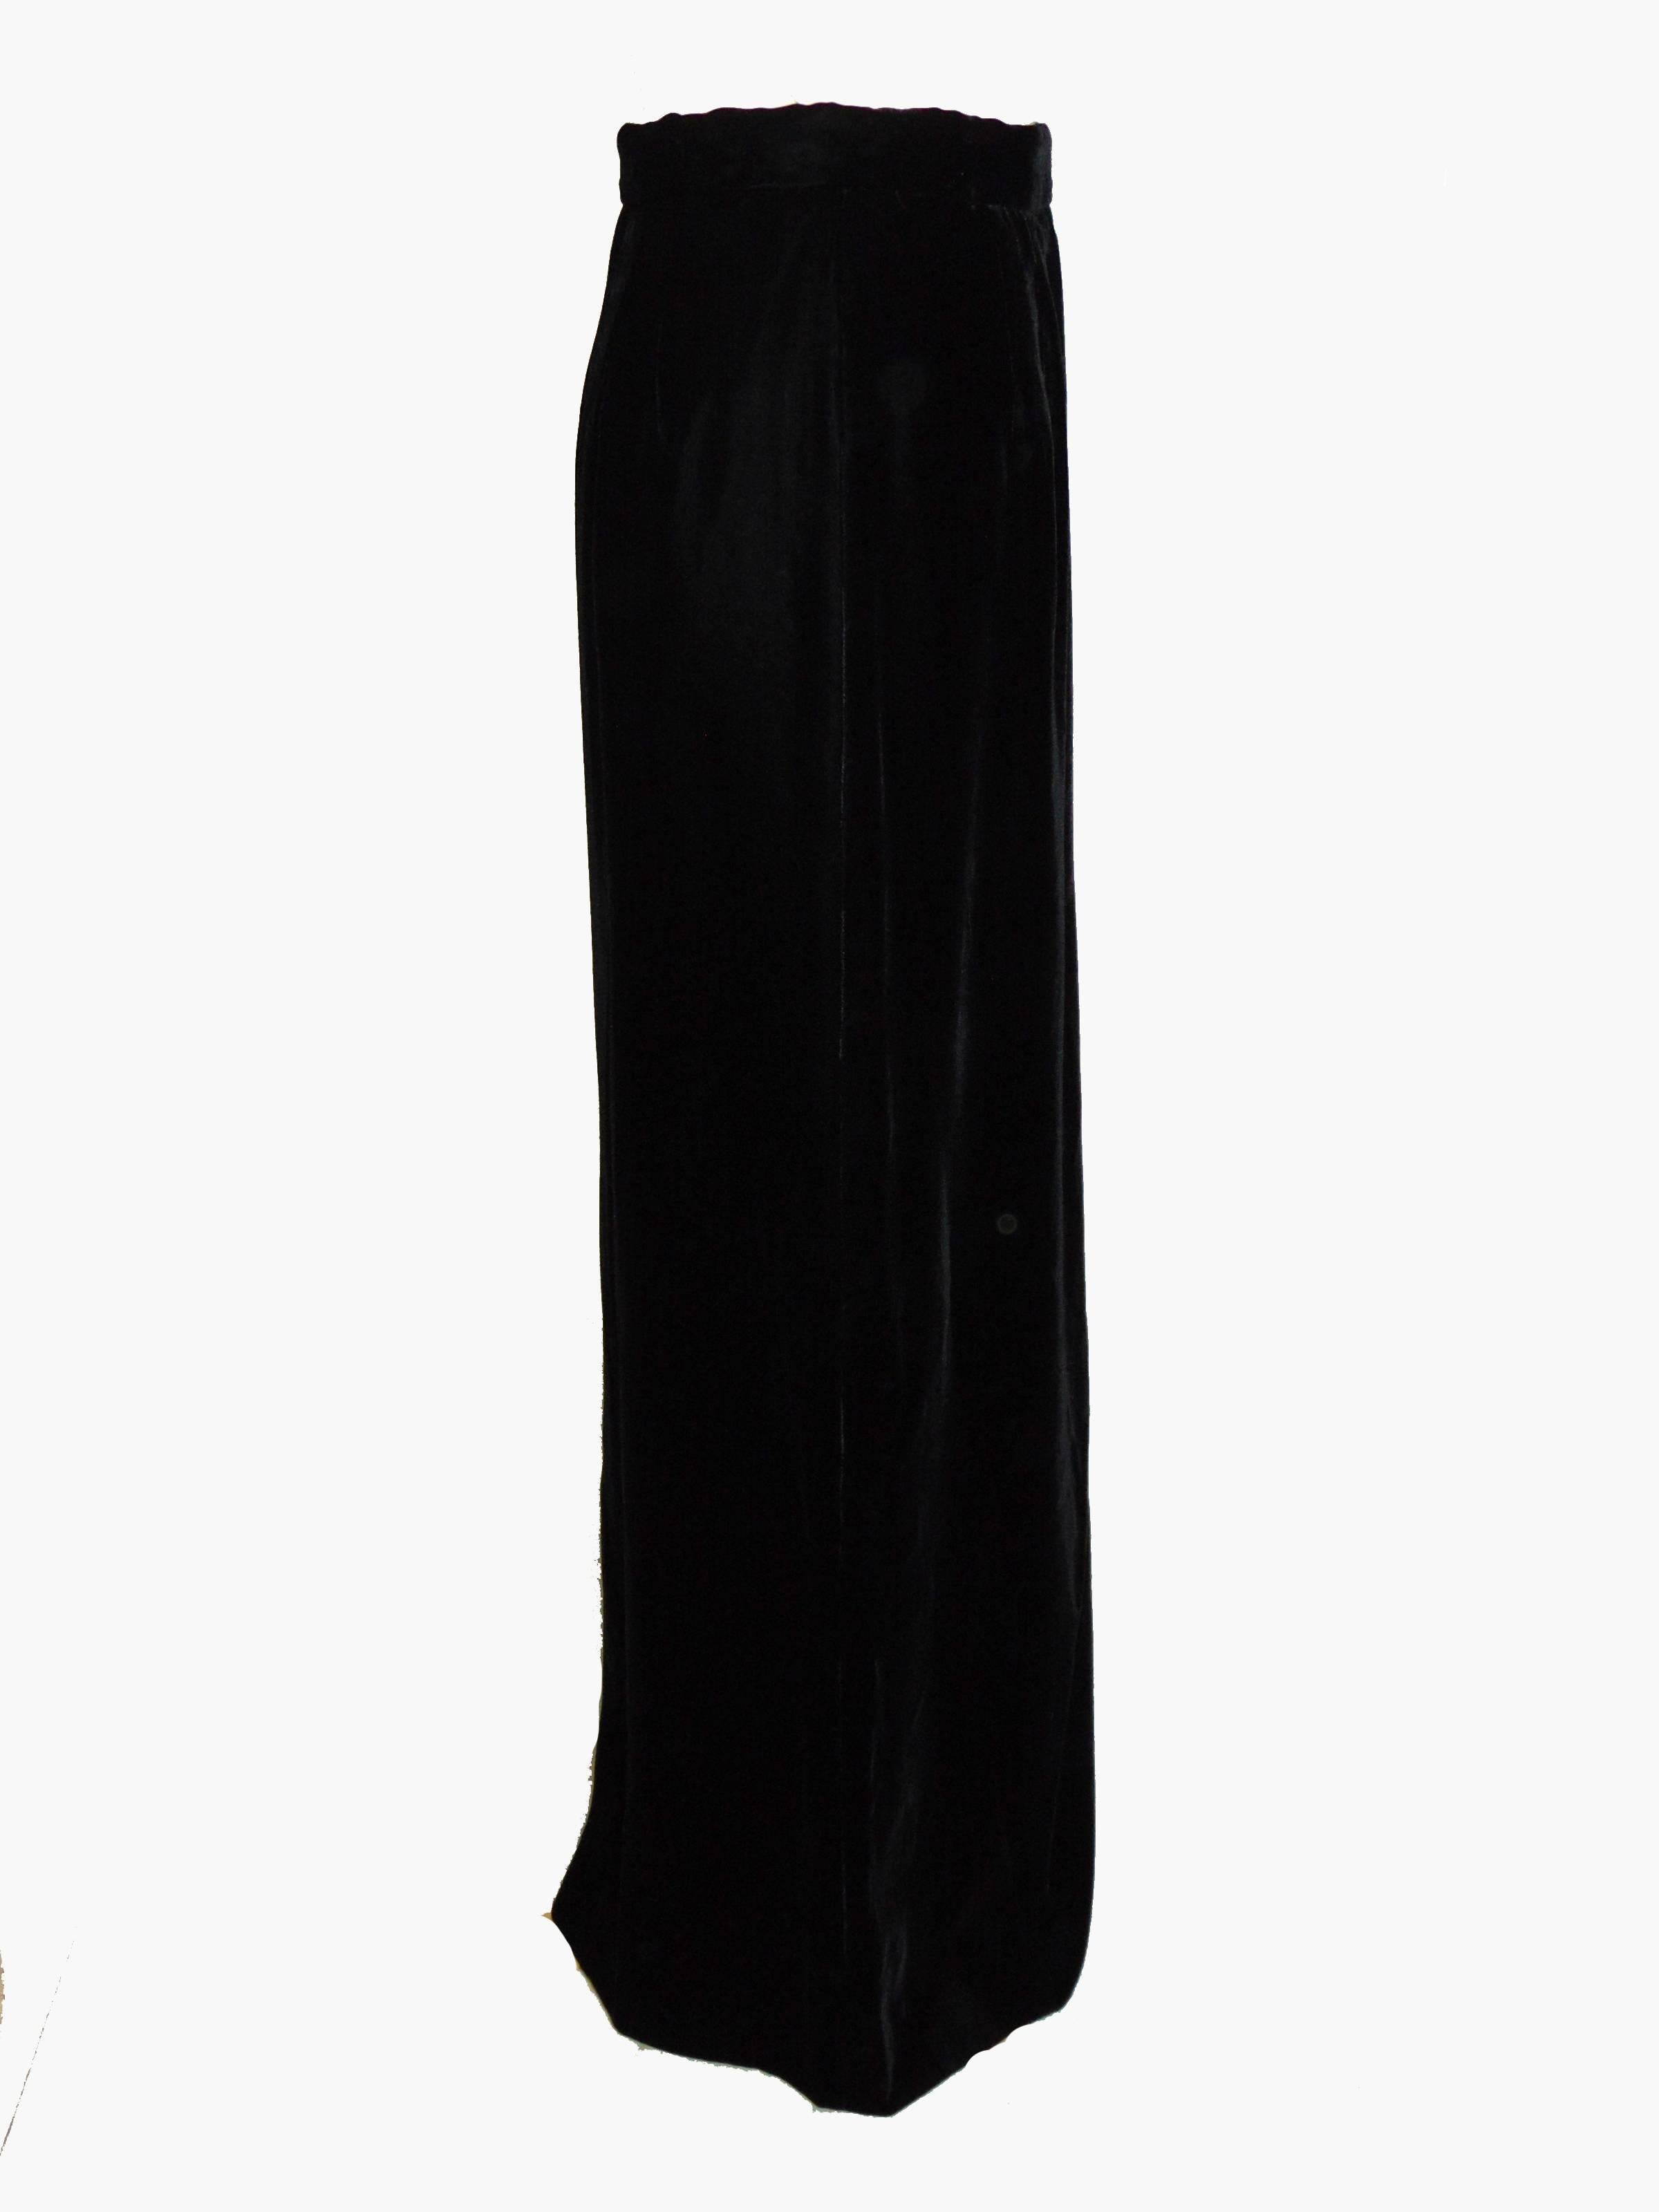 Classic Oscar de la Renta Black Evening Skirt with Side Vent Size 12 1980s  In Excellent Condition In Port Saint Lucie, FL